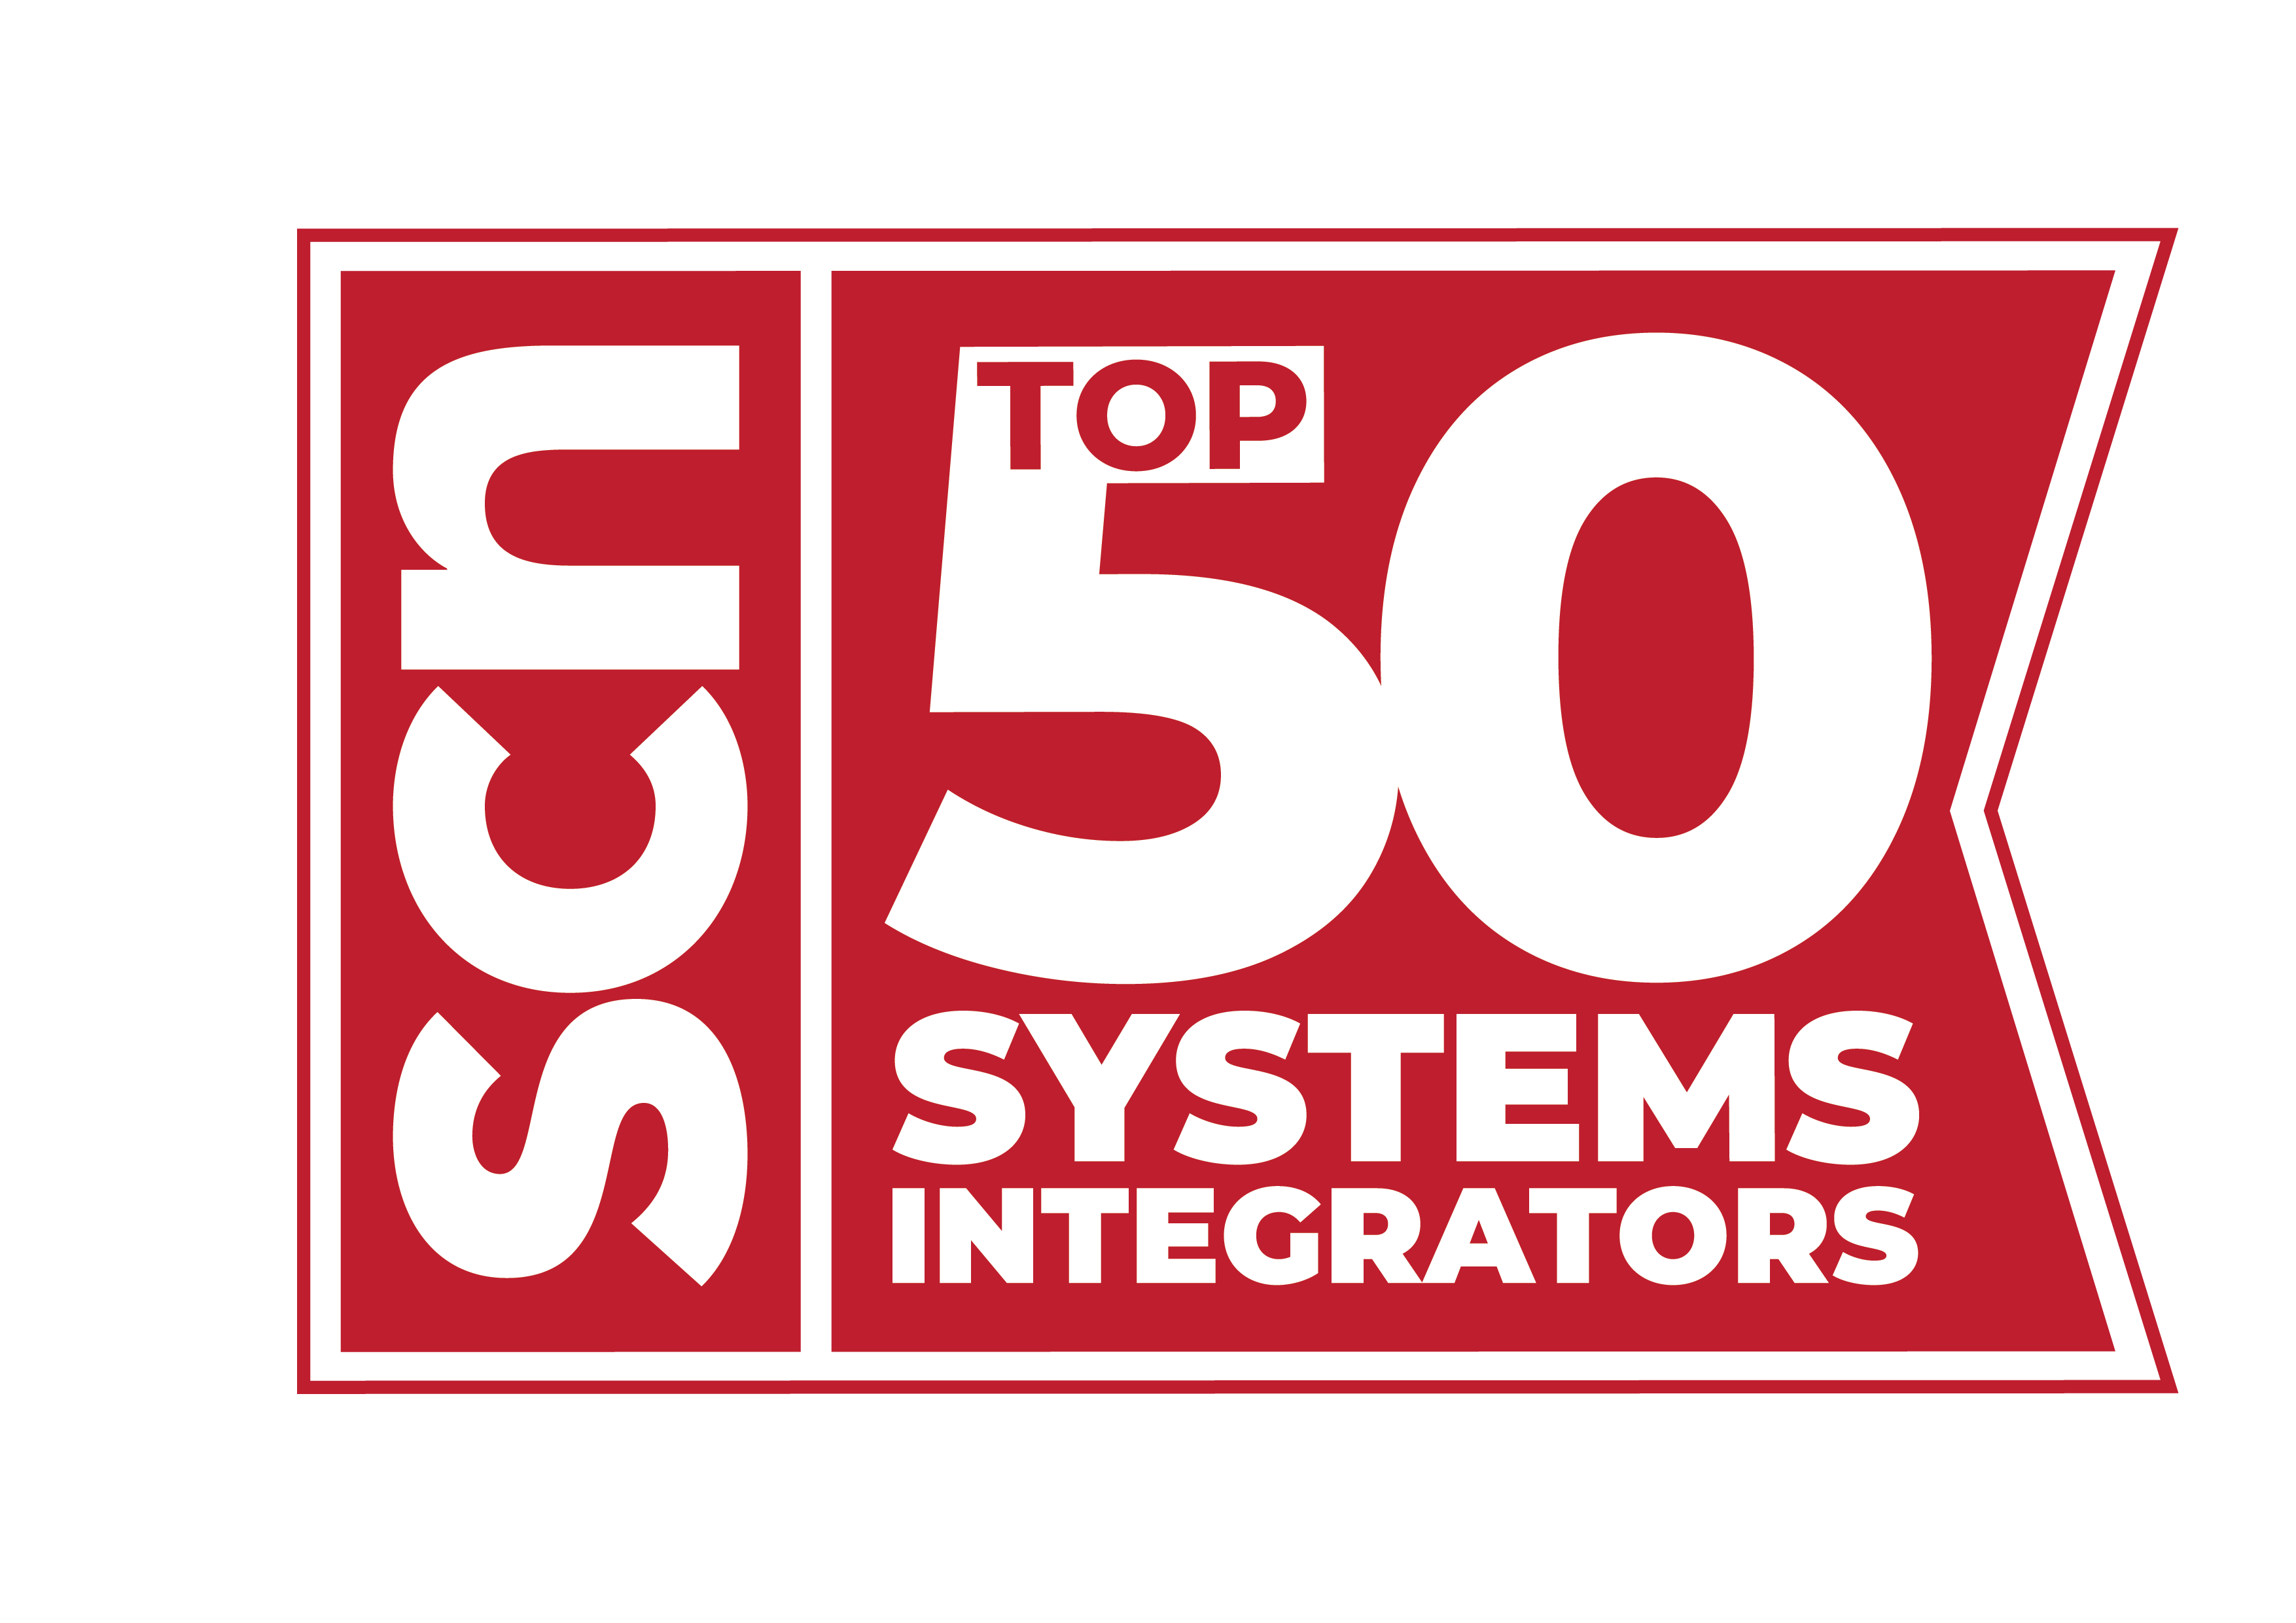 SCN TOP50 SYSTEMS INTEGRATORS logo-02